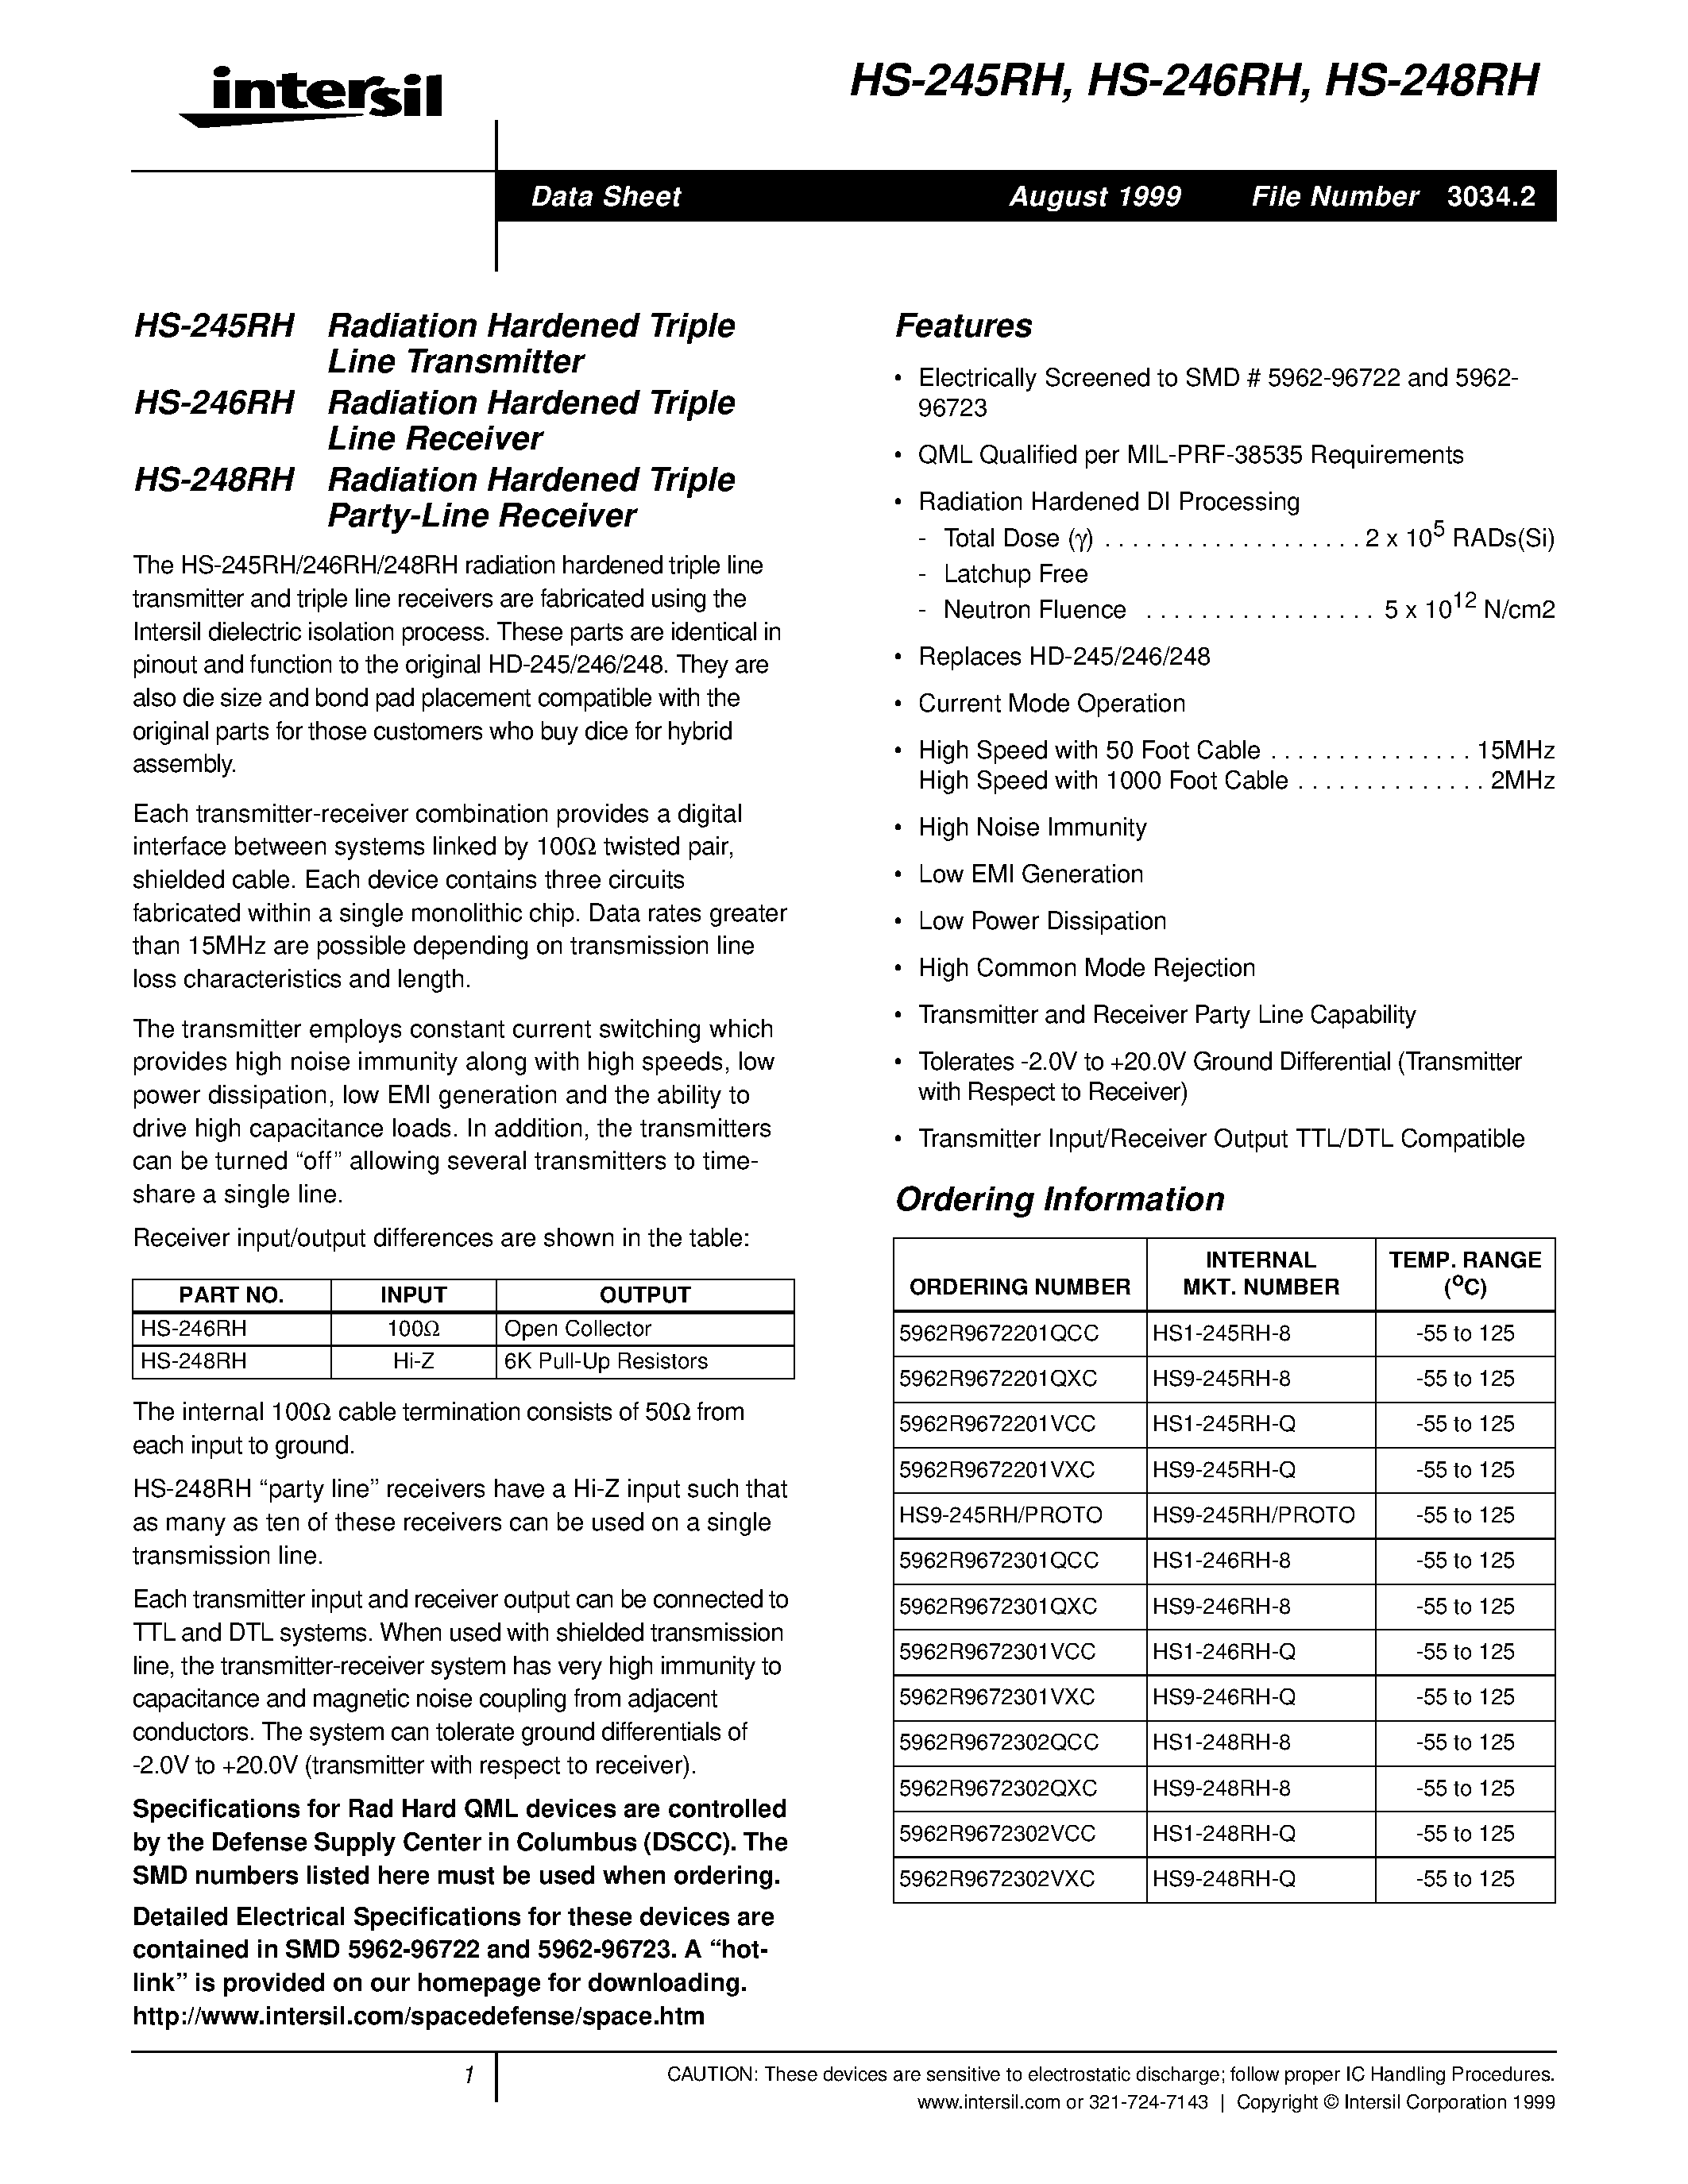 Даташит HS1-246RH-Q-Radiation Hardened Triple Line(party-Line) Transmitter страница 1